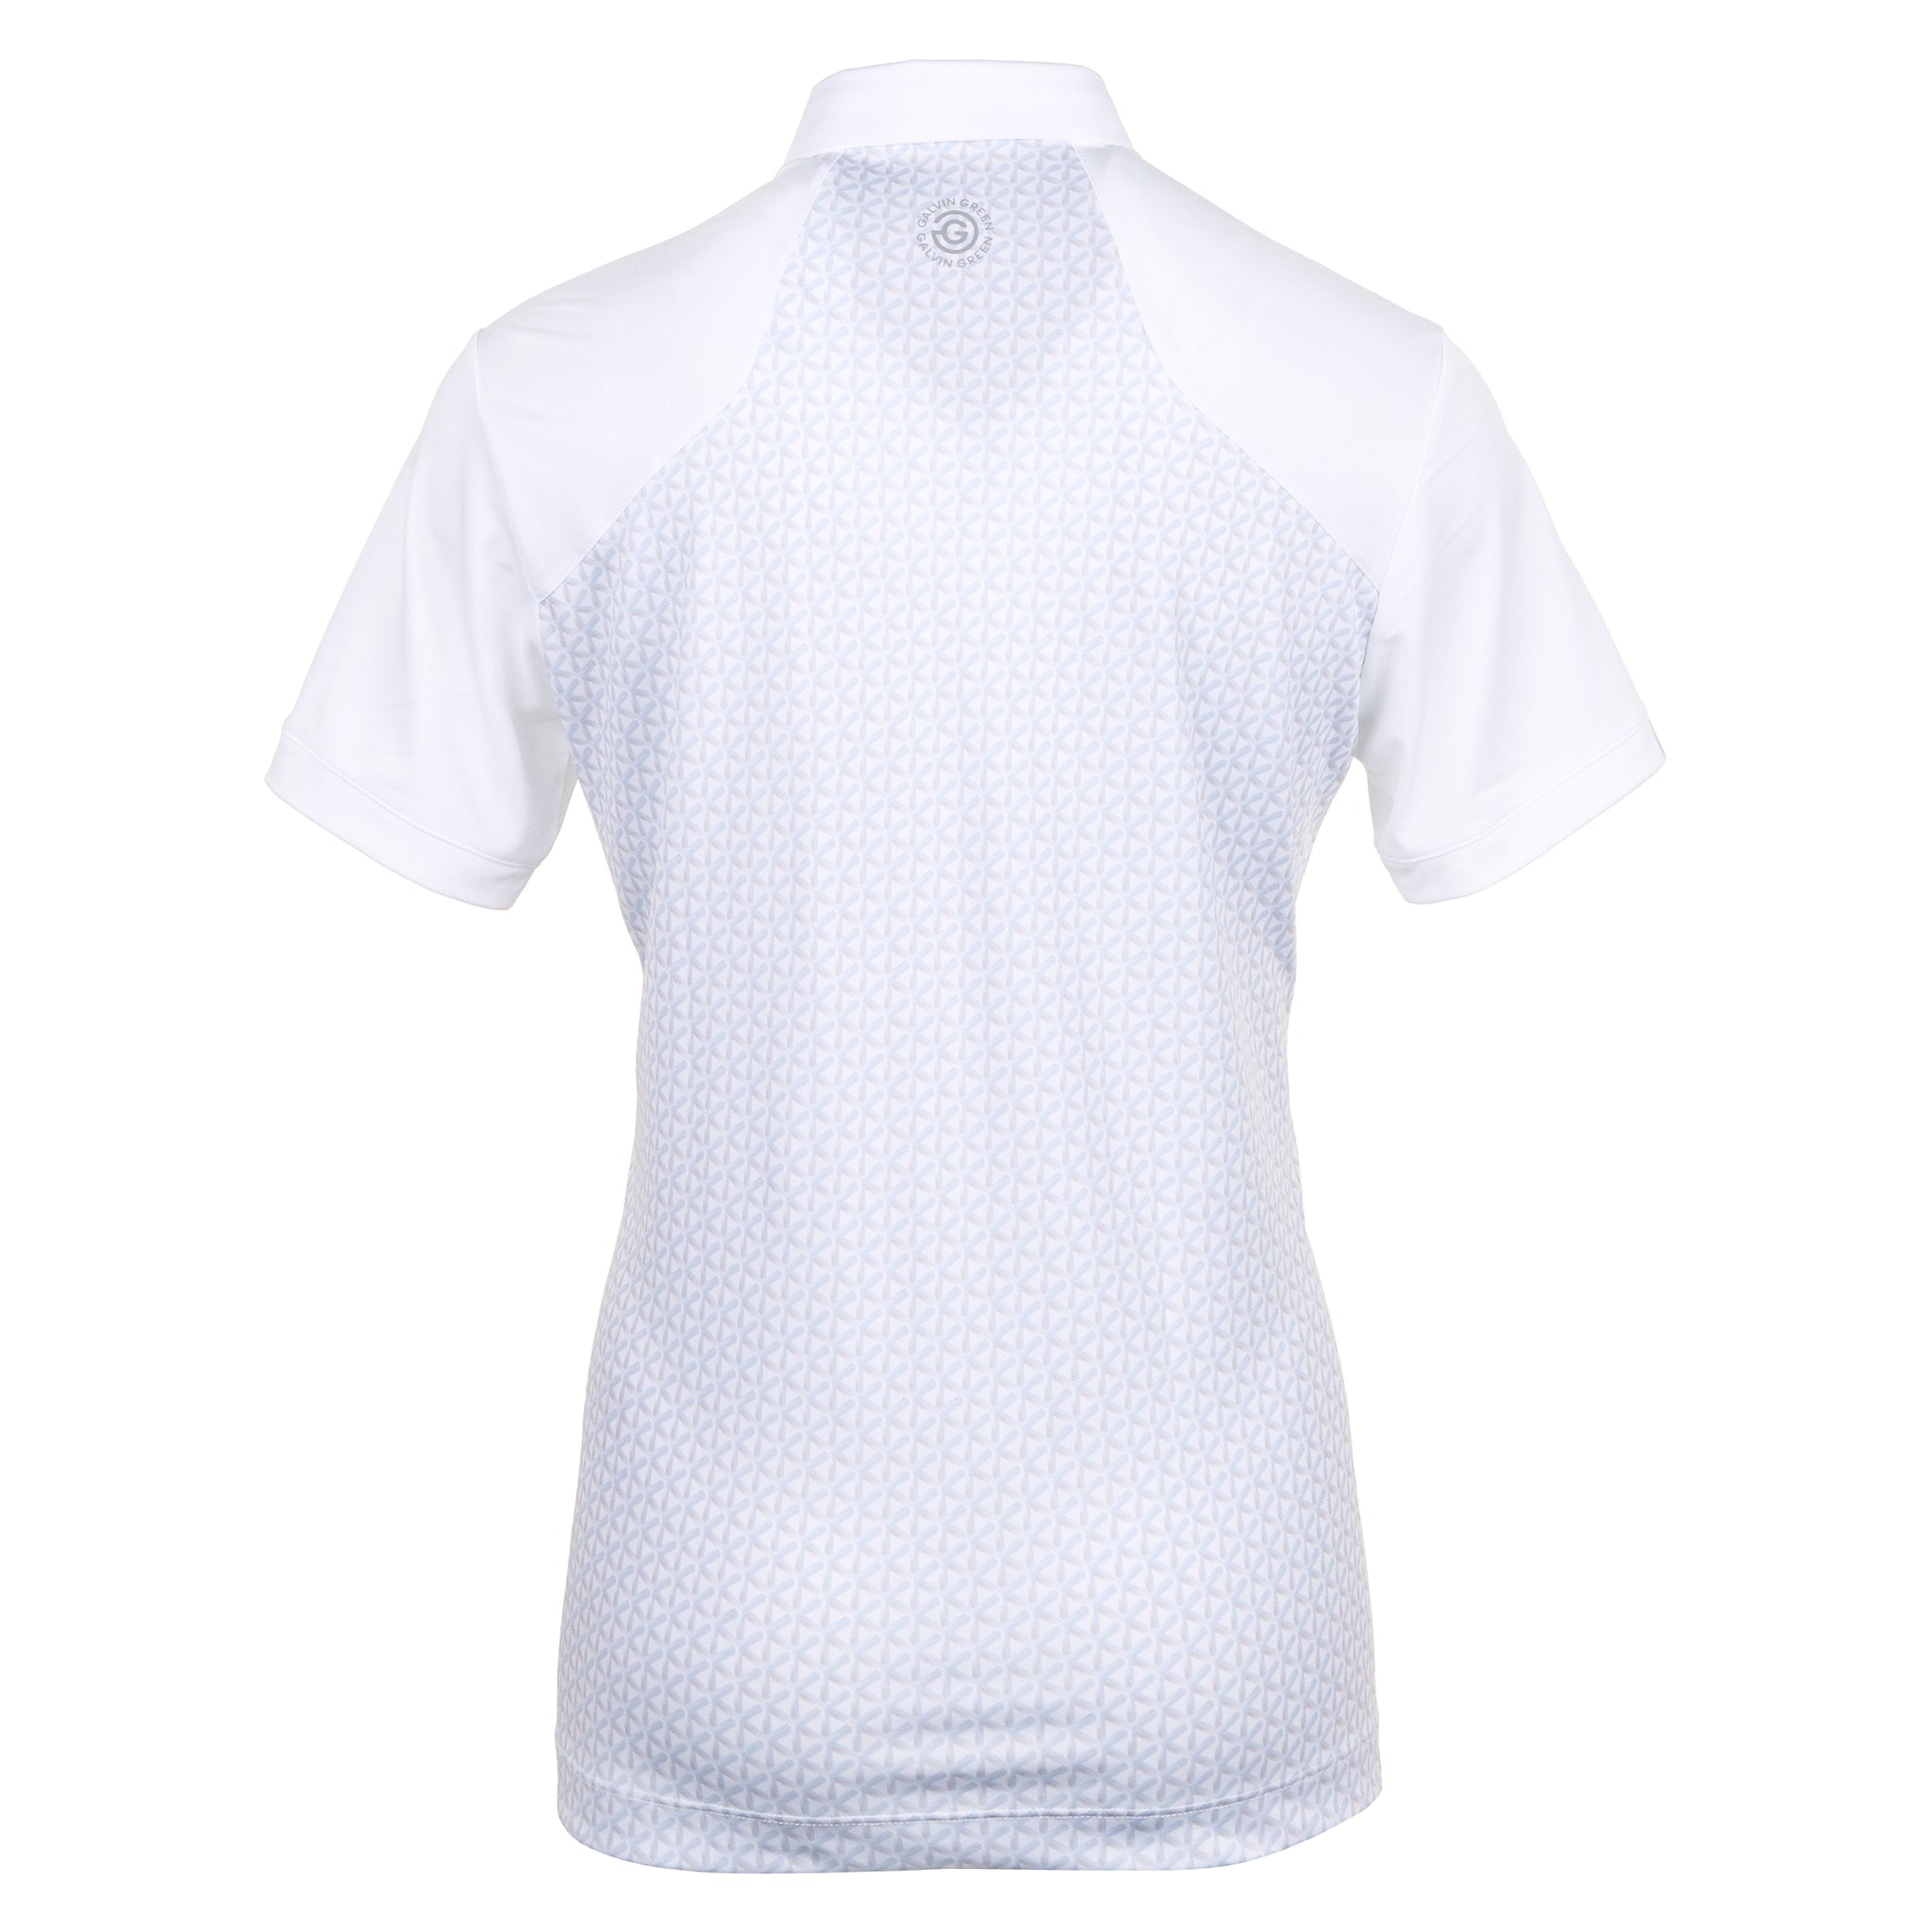 Galvin Green Mio Ventil8+ Golf Shirt